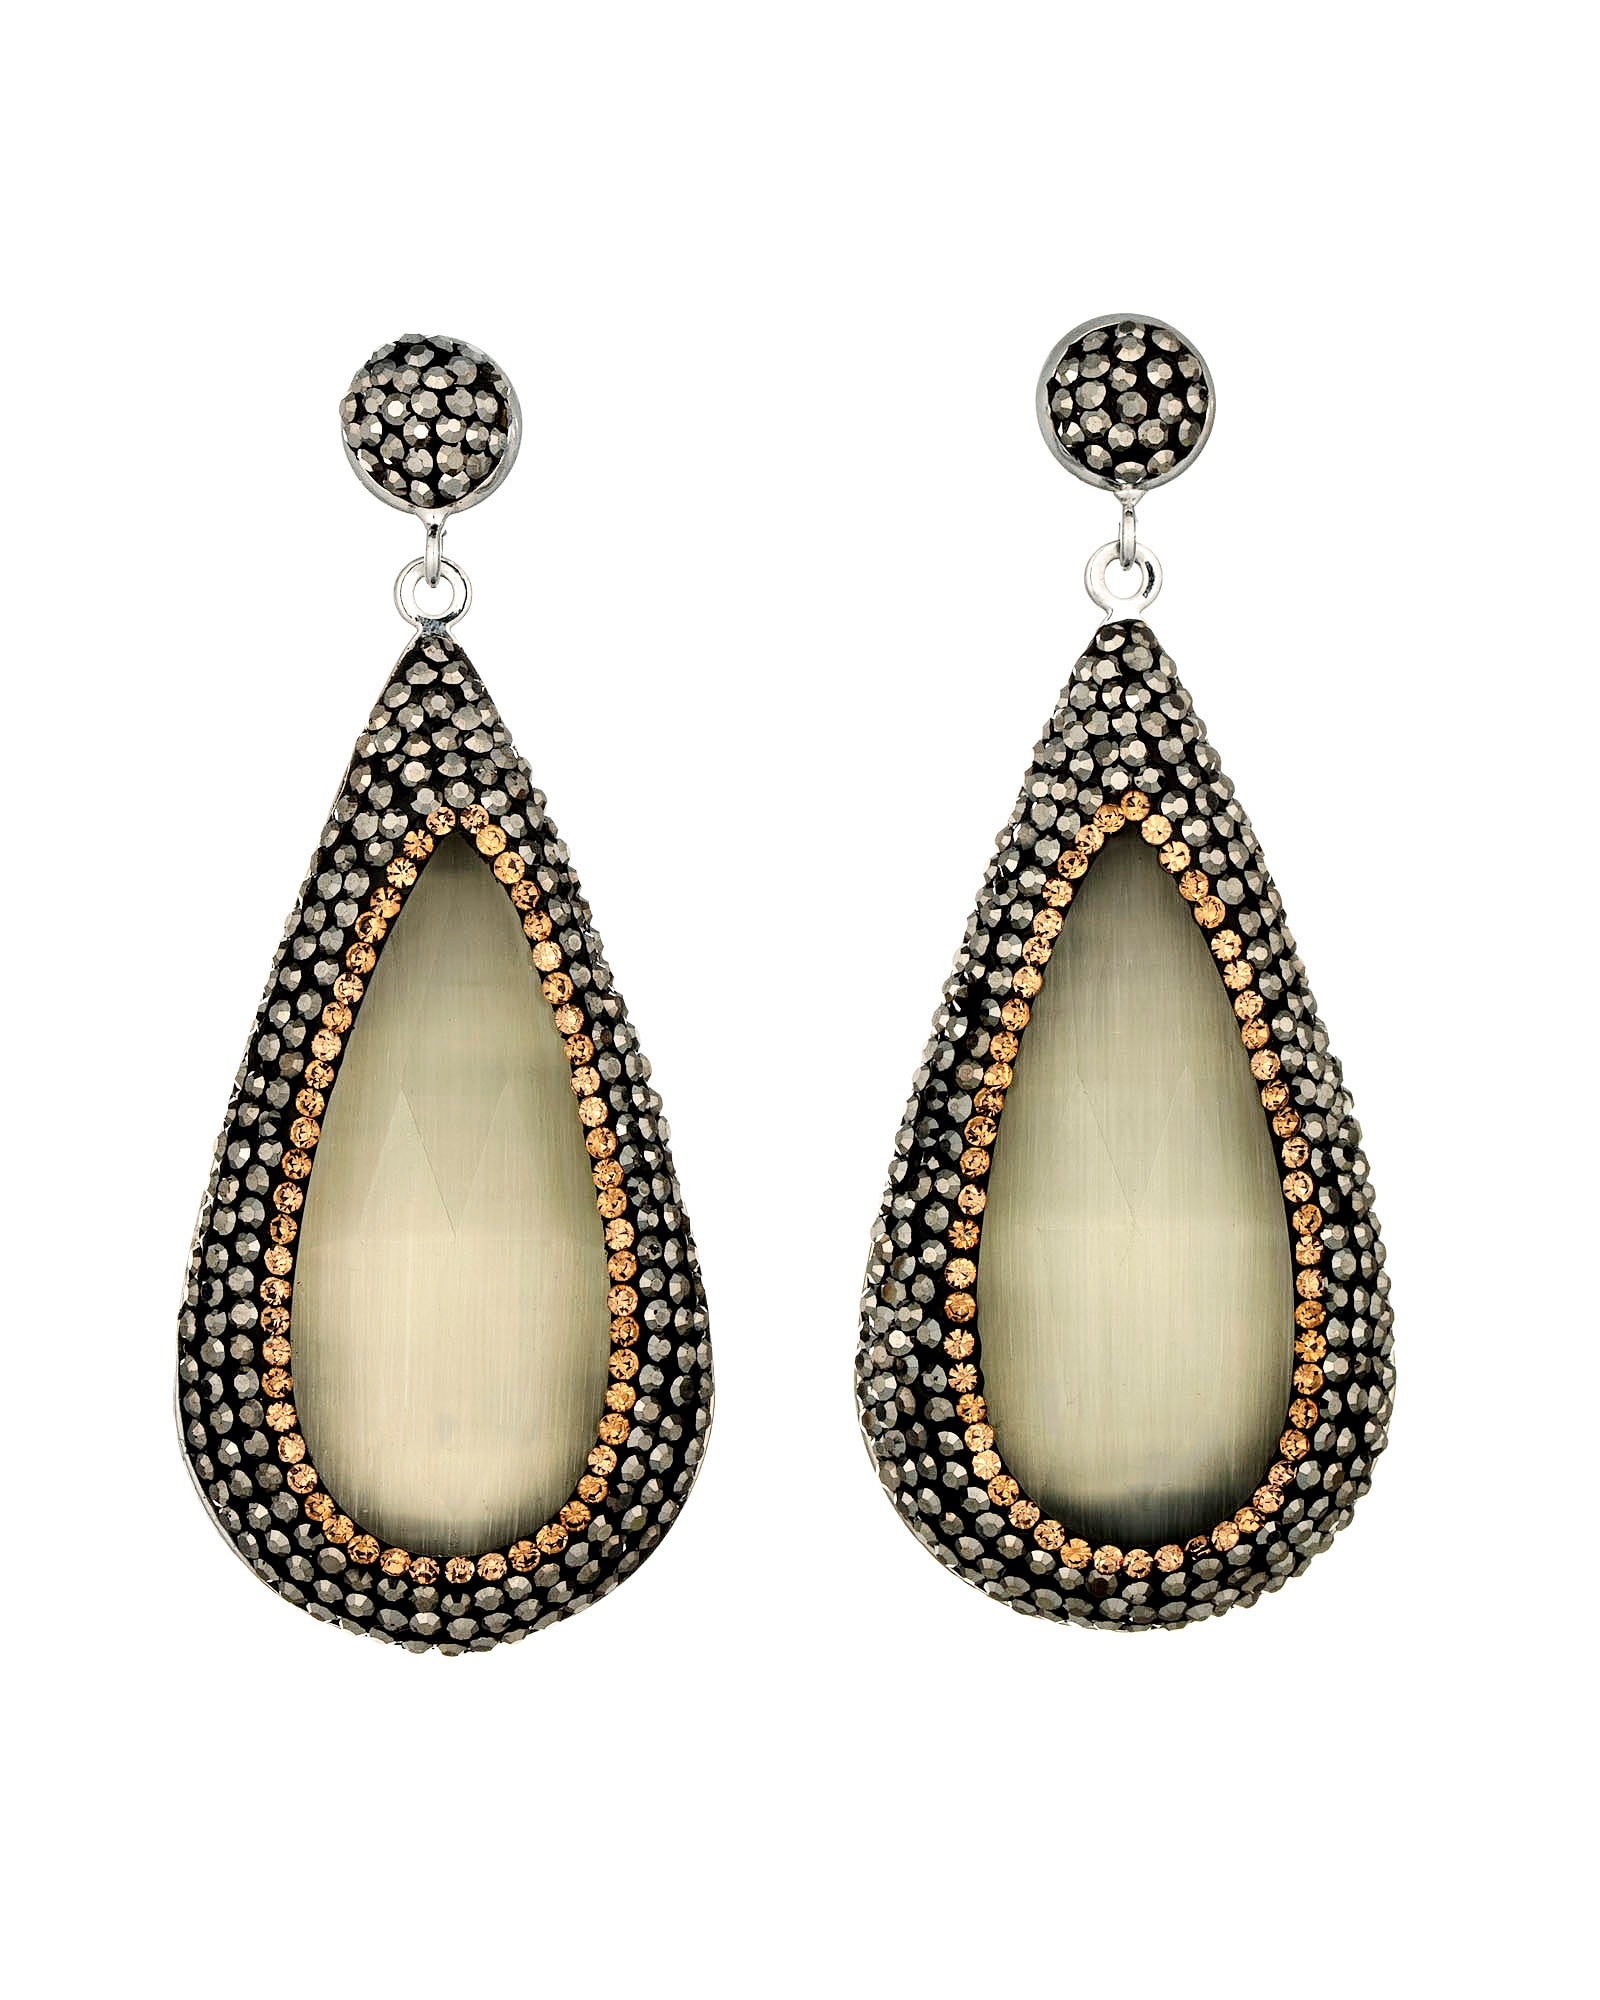 Sale! Large White Gemstone Earrings